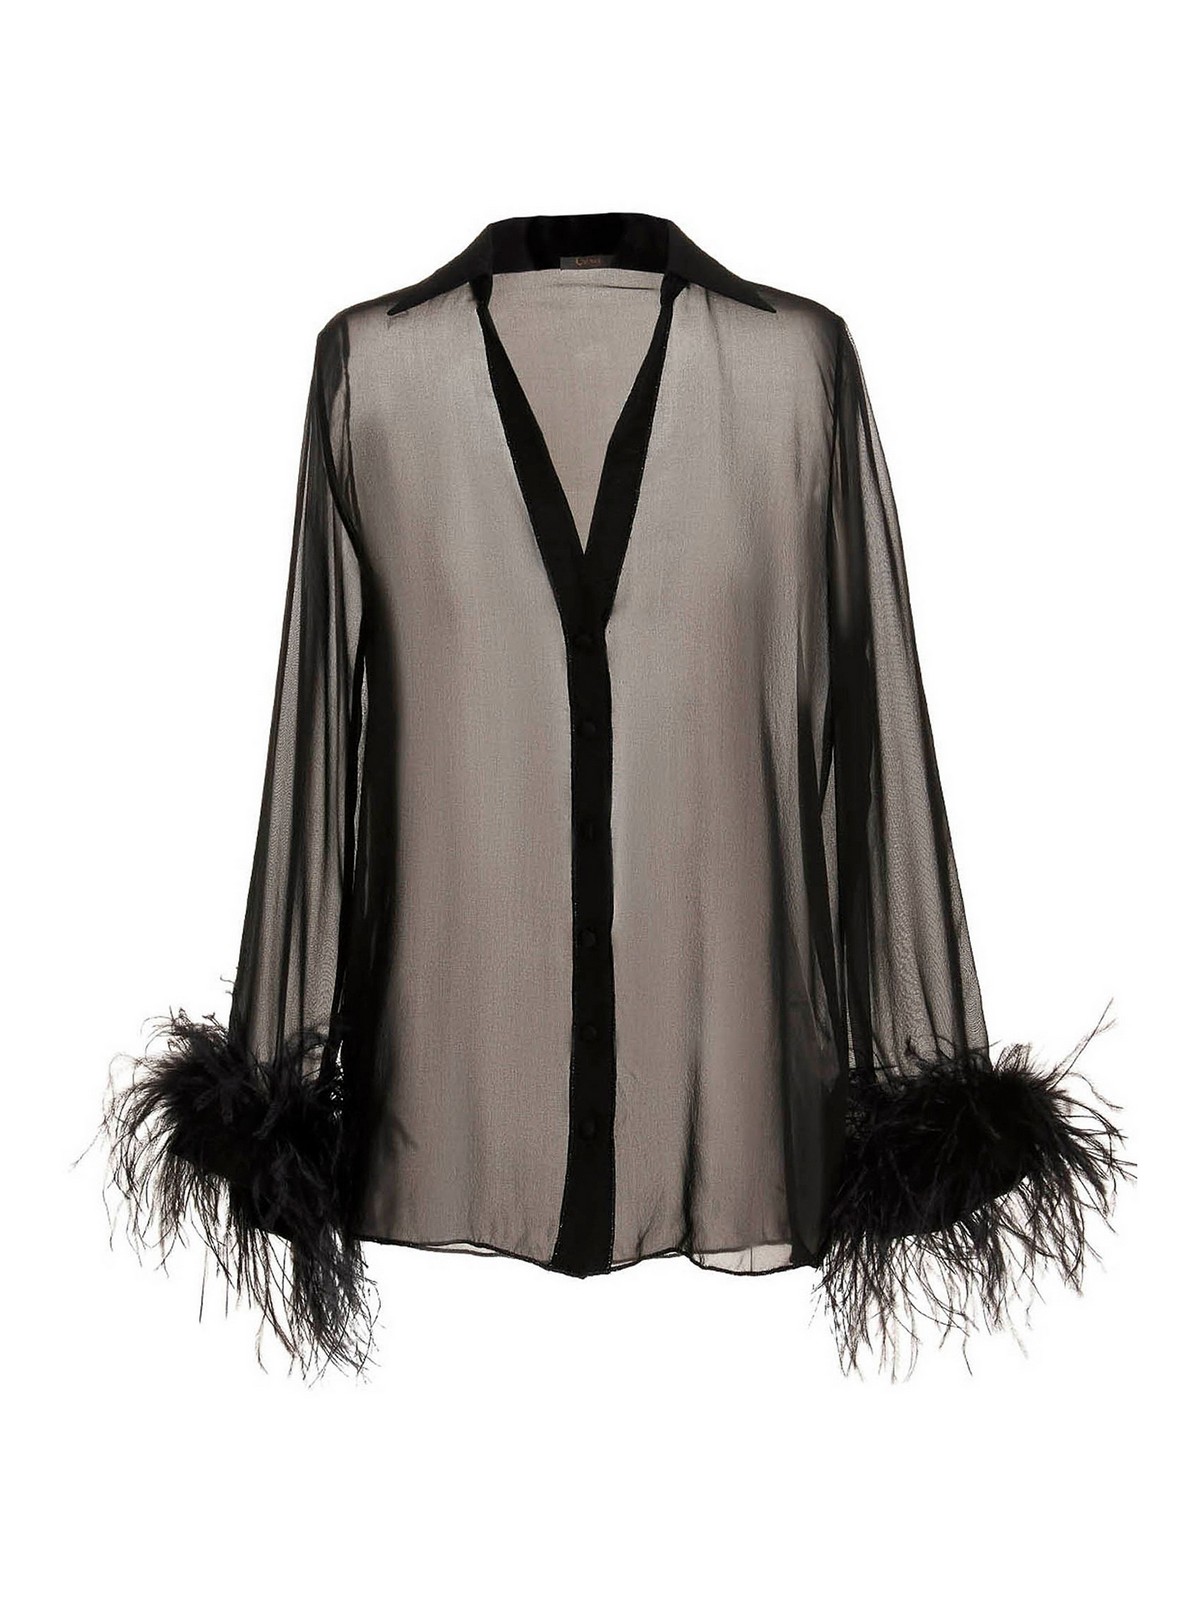 Blouses Oséree - Feather silk blouse - OFC121BLACK | Shop online at iKRIX